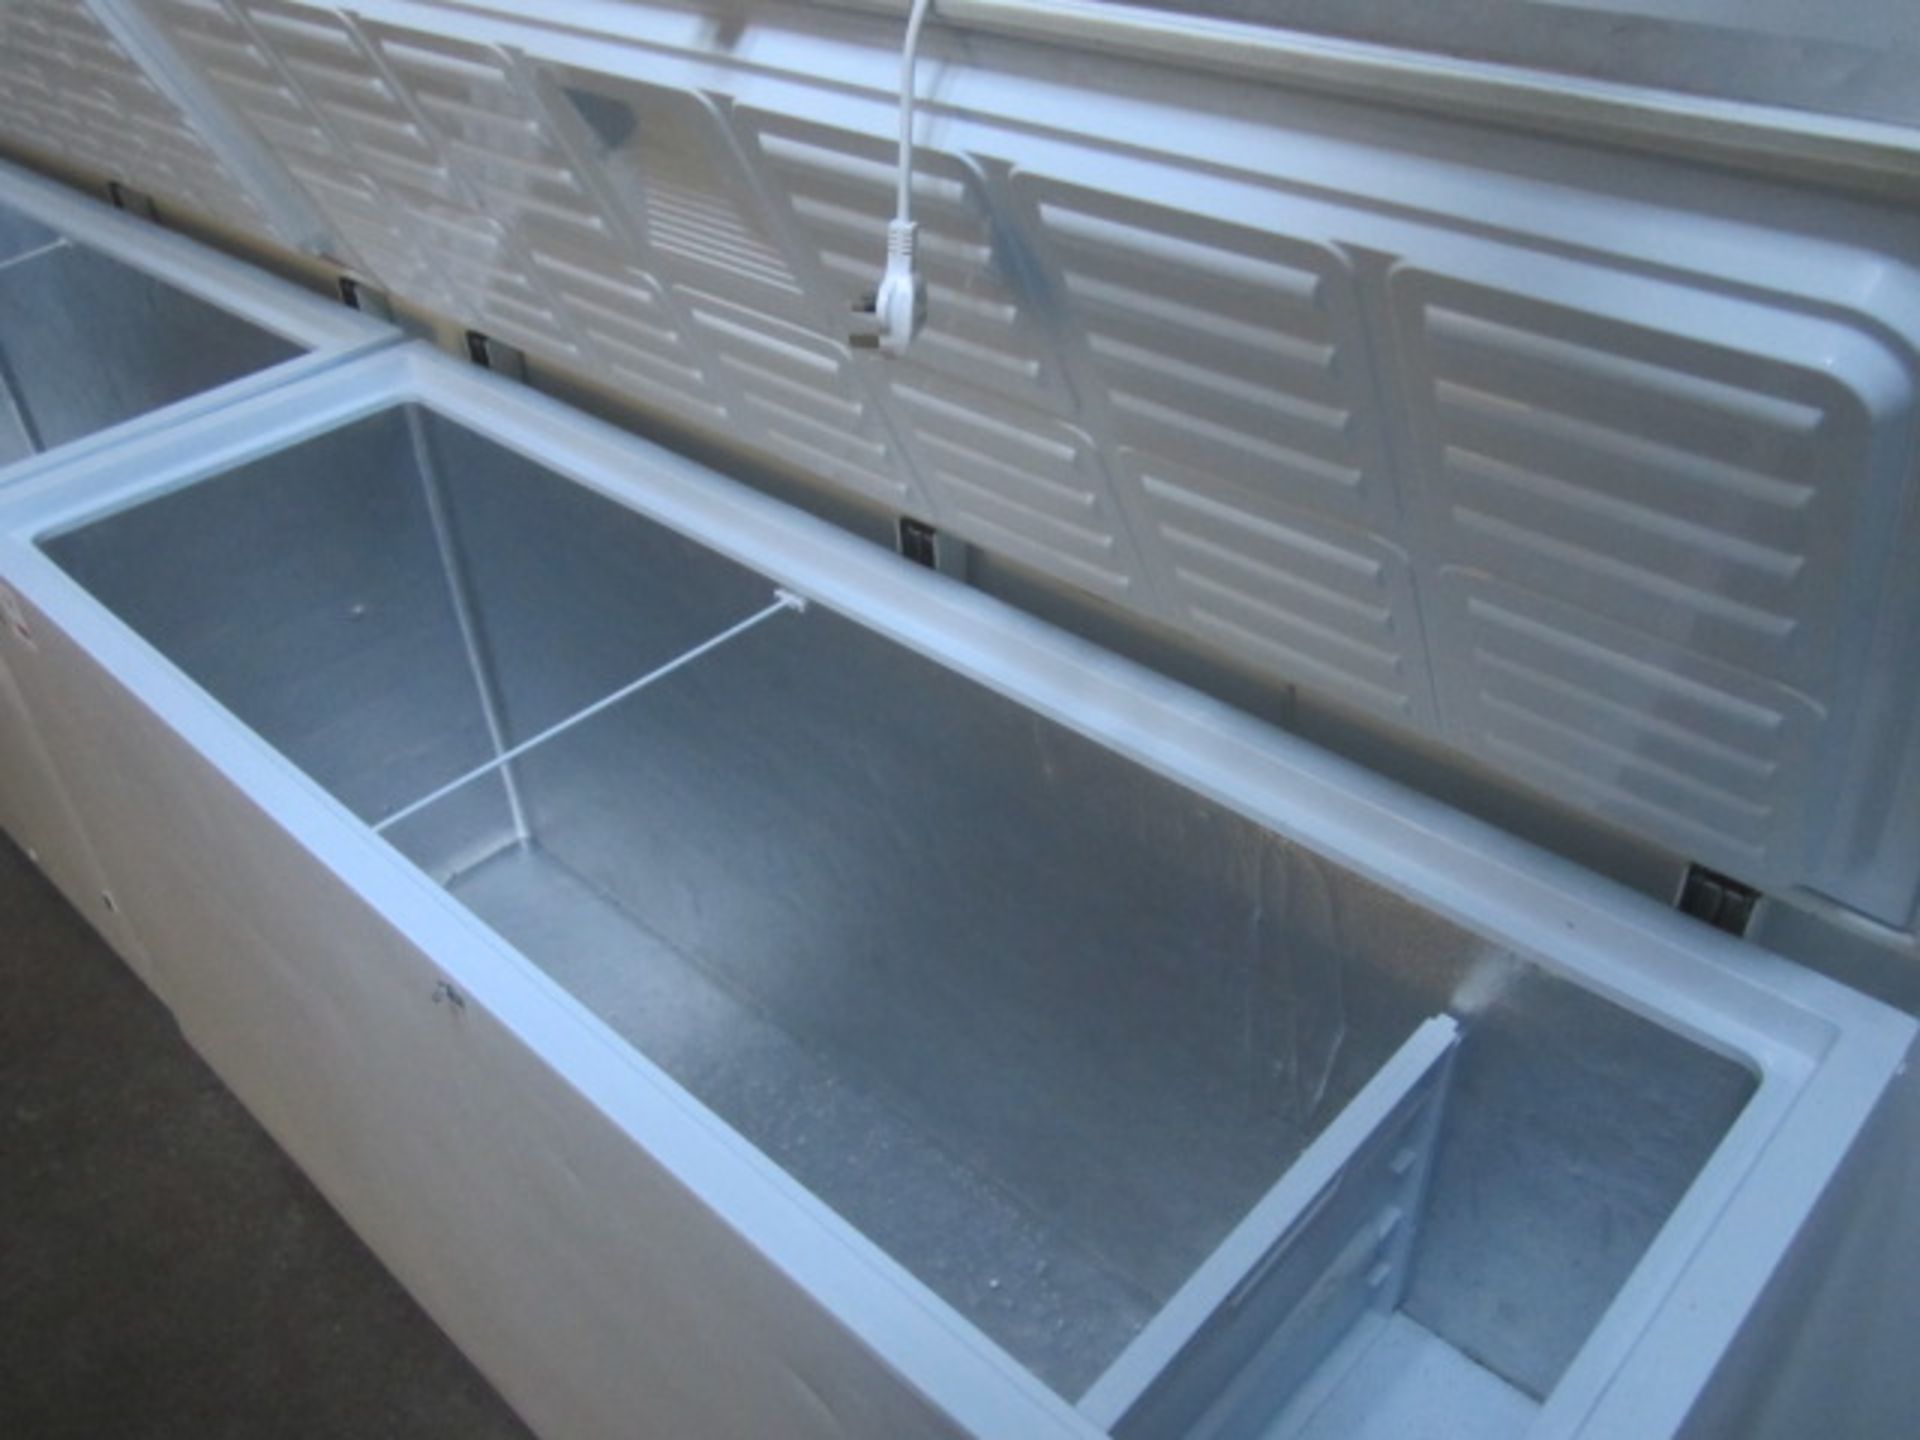 Tefcold chest freezer, 240v, 1800mm length - Image 2 of 2